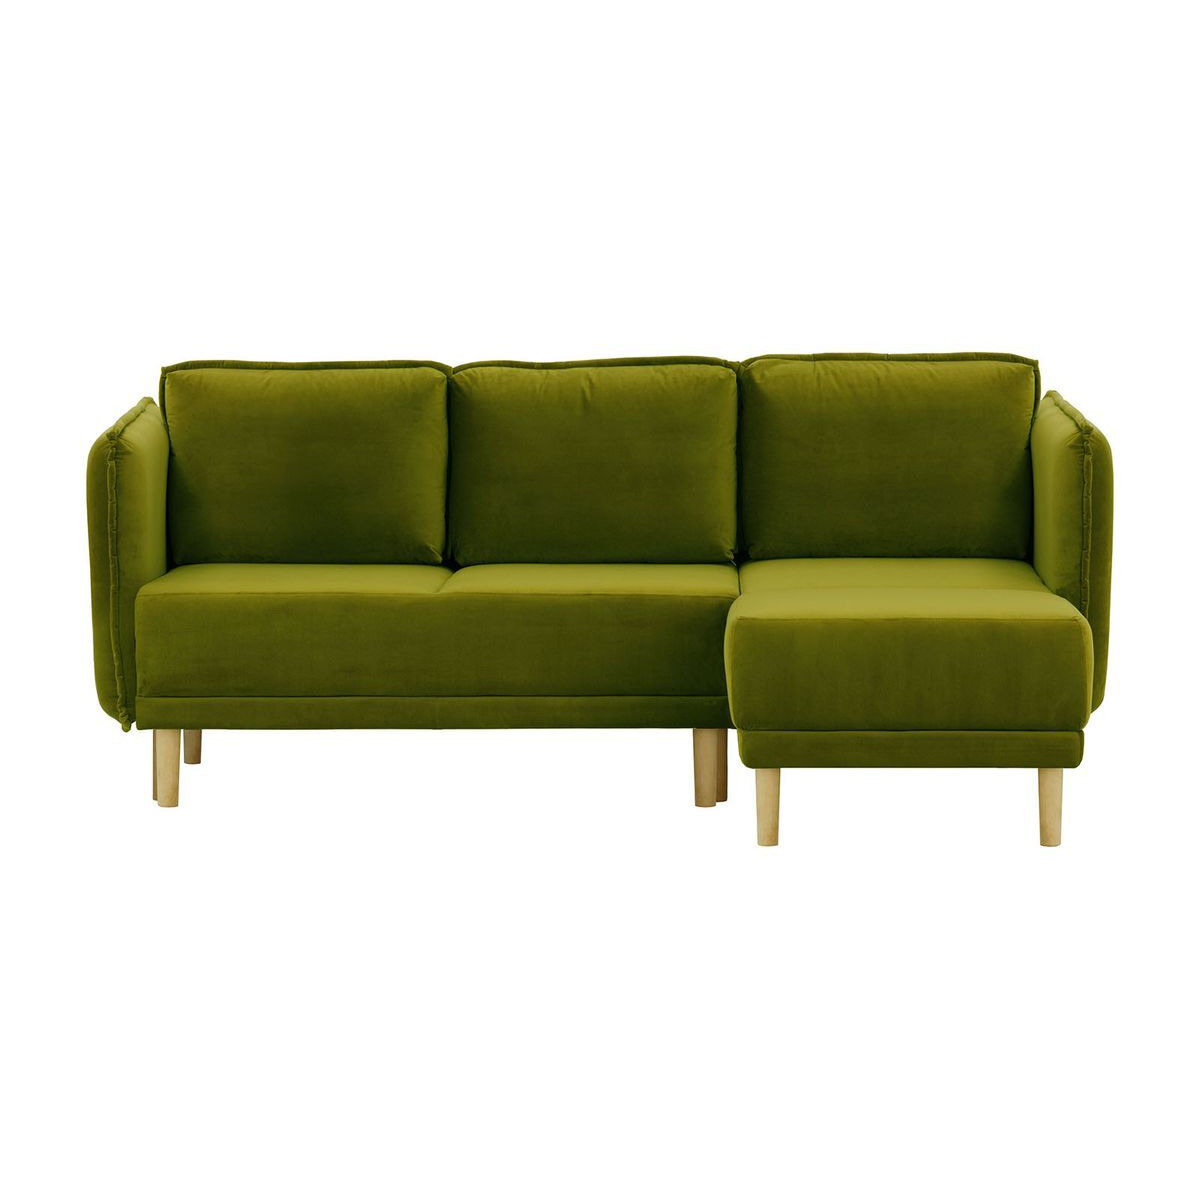 Swift Corner Sofa Bed, olive green - image 1